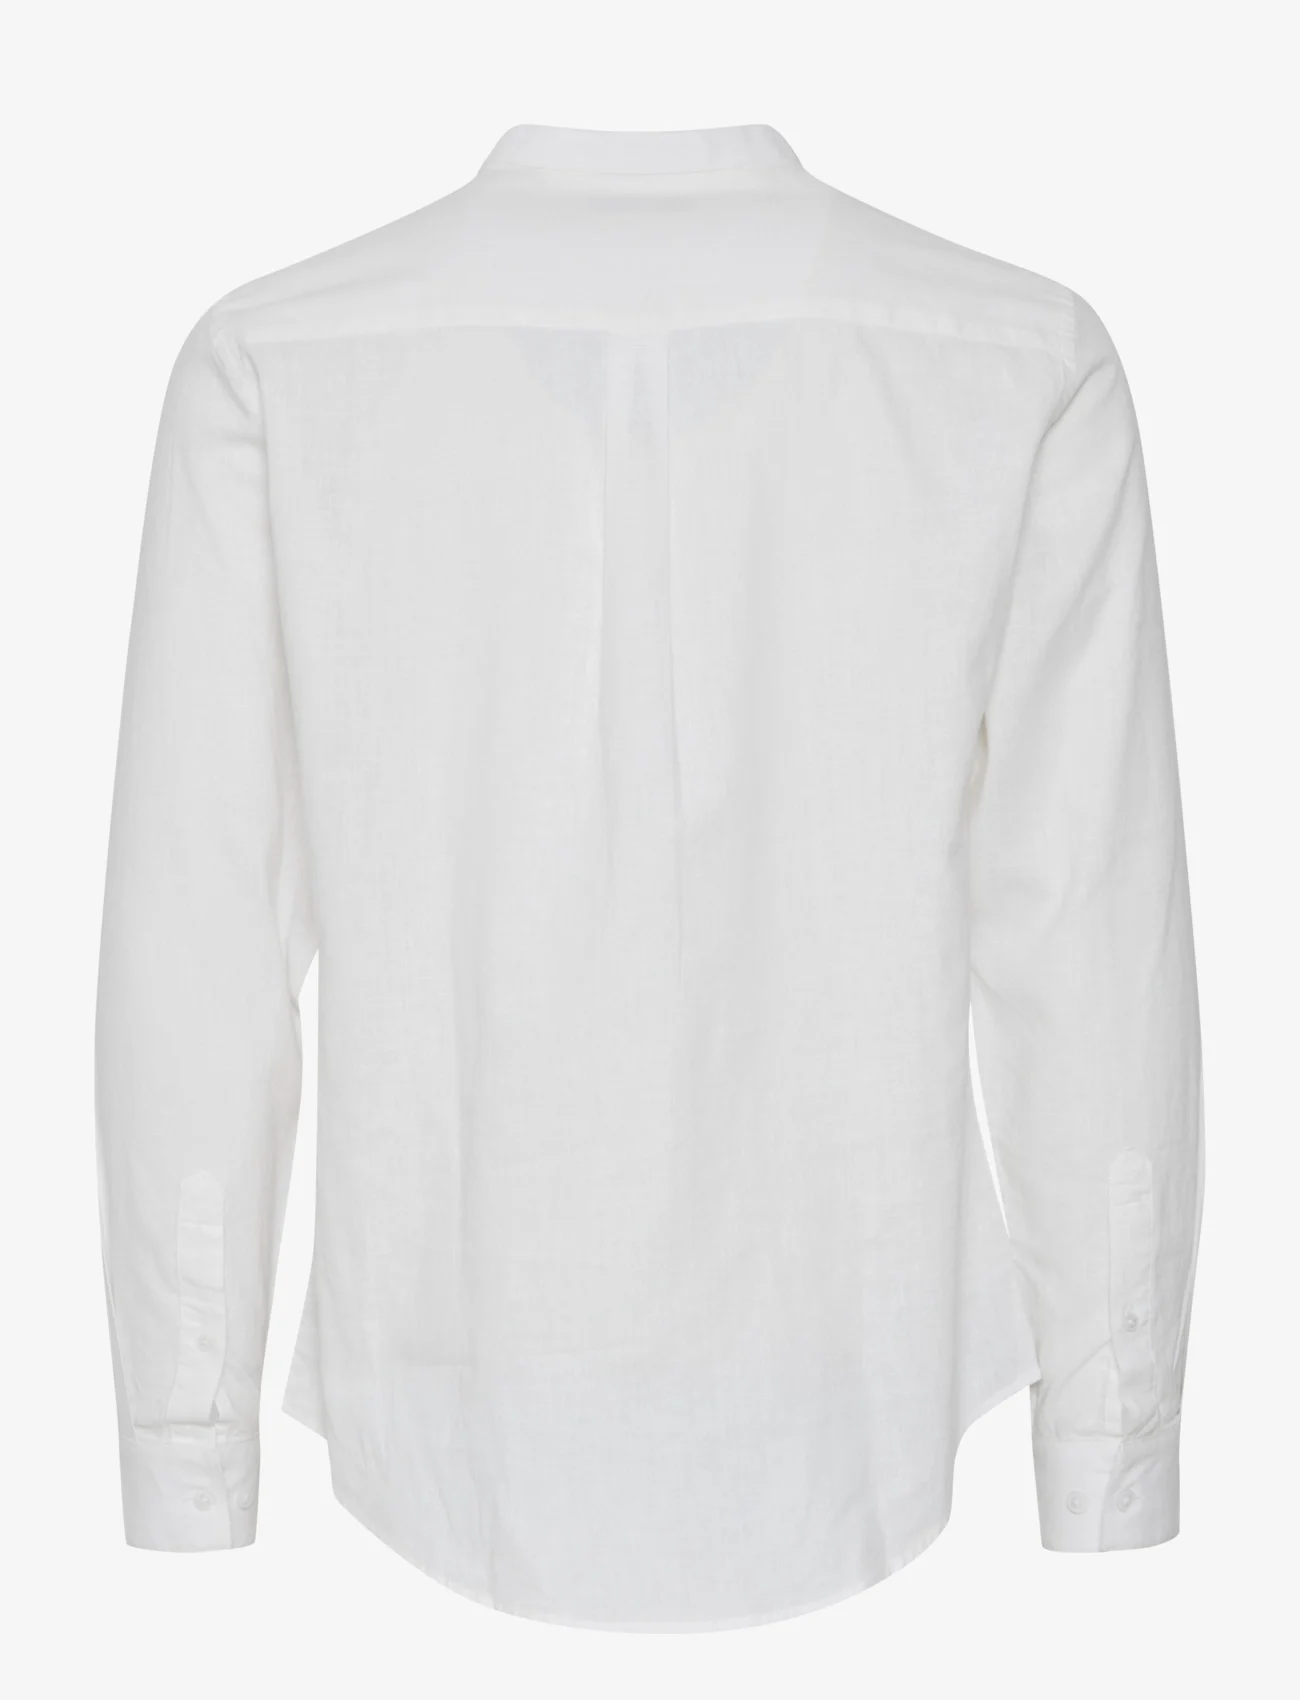 Casual Friday - CFAnton 0053 CC LS linen mix shirt - linskjorter - snow white - 1